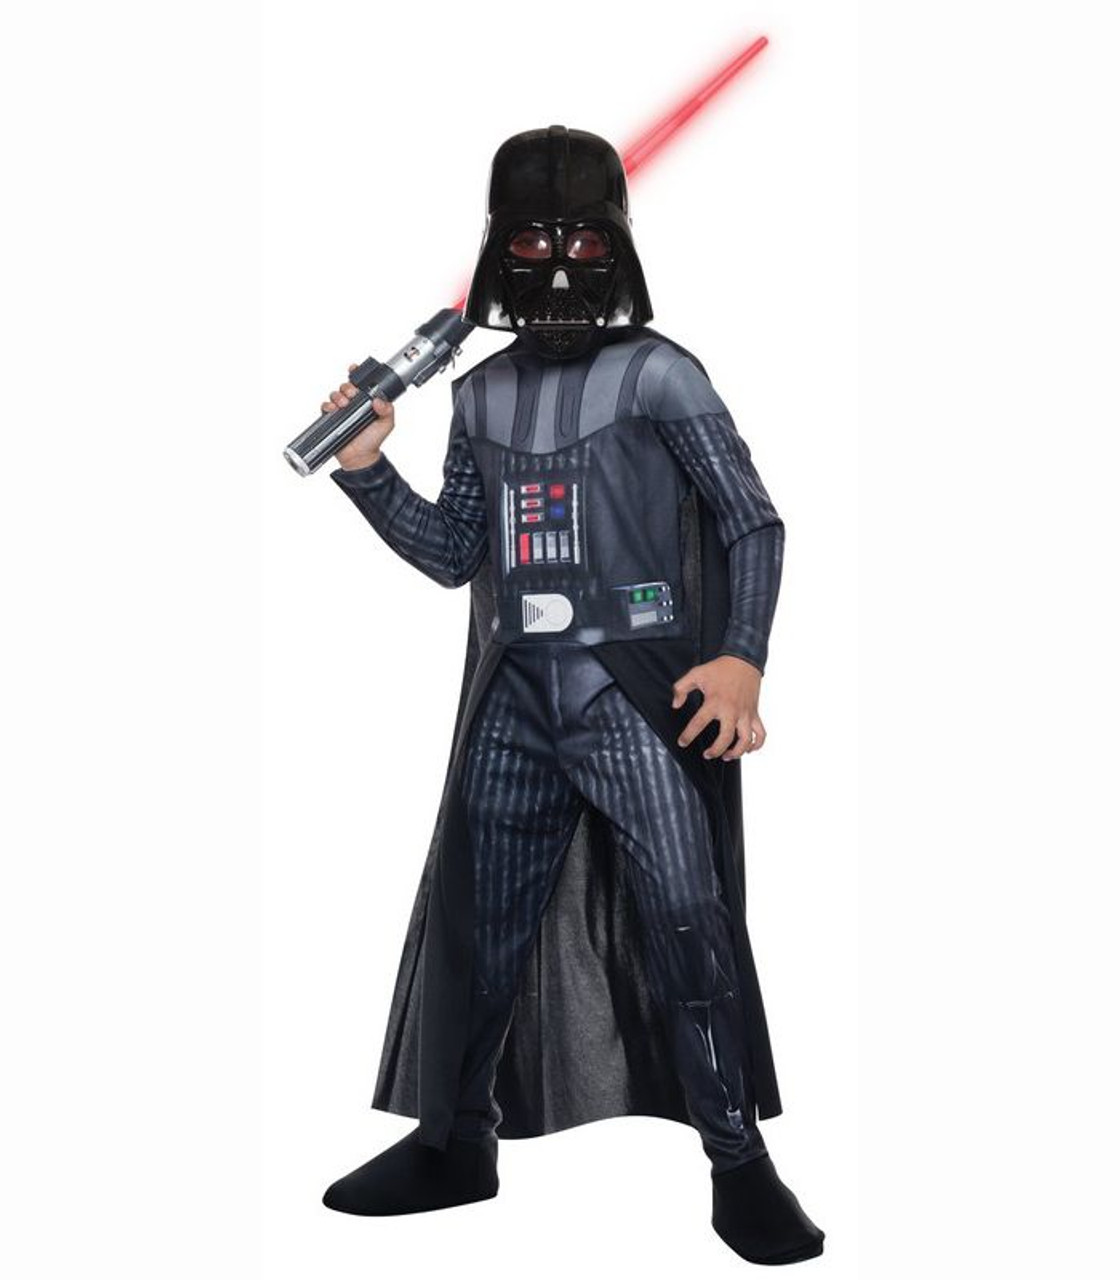 Boy's Photo-Real Darth Vader Costume - Star Wars Classic